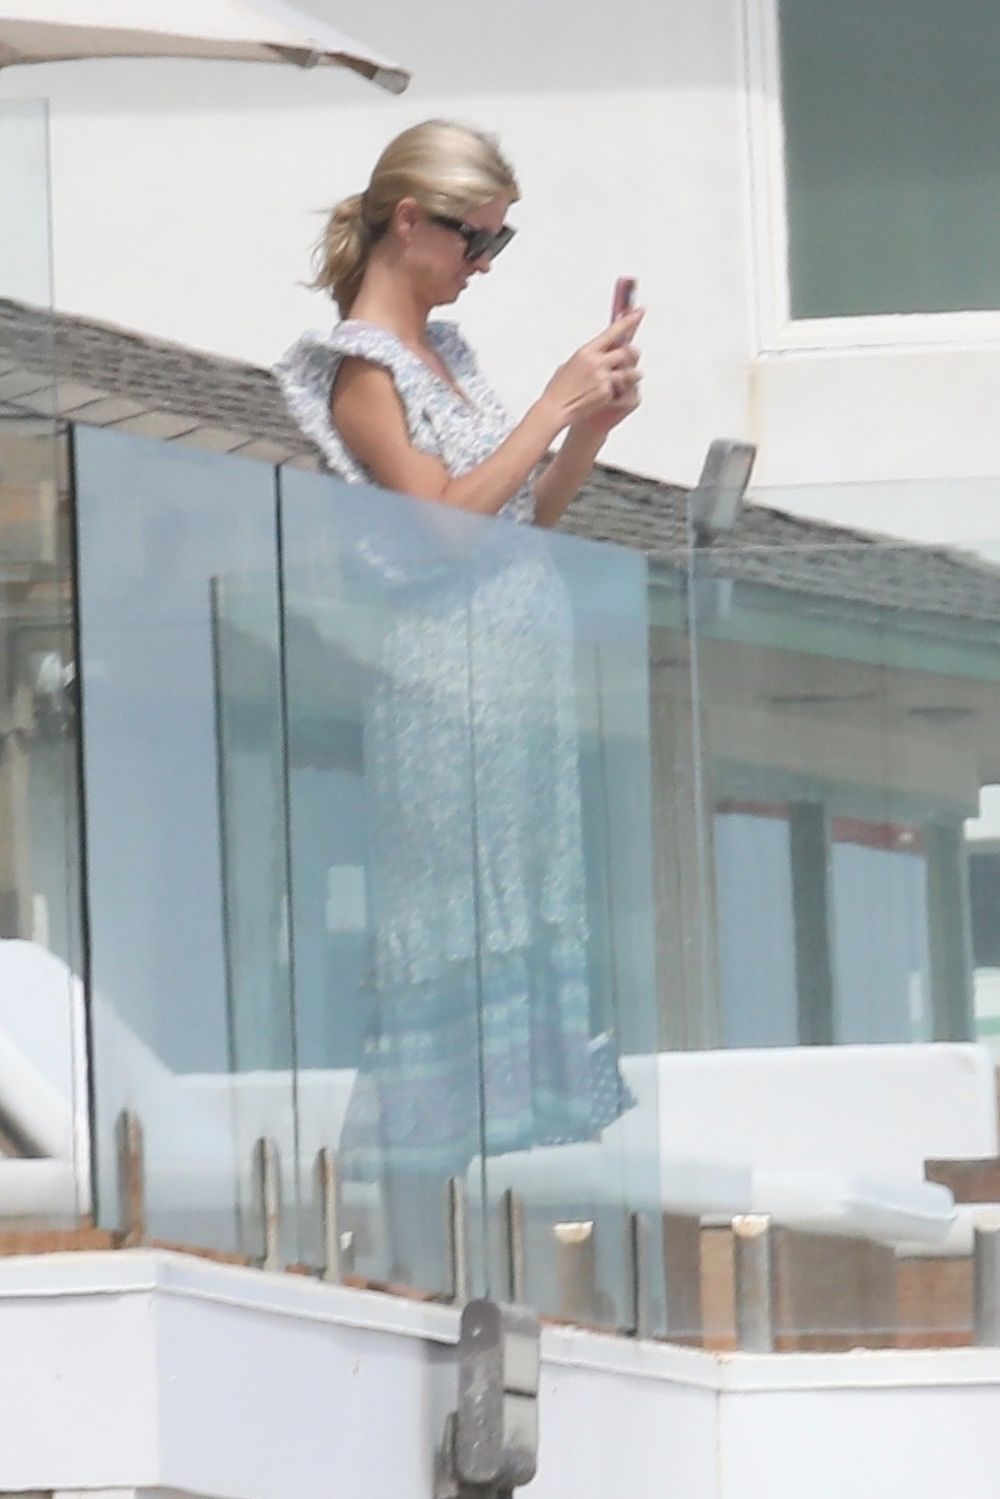 NICKY HILTON at Her Balcony in Santa Monica 07/31/2022 – HawtCelebs